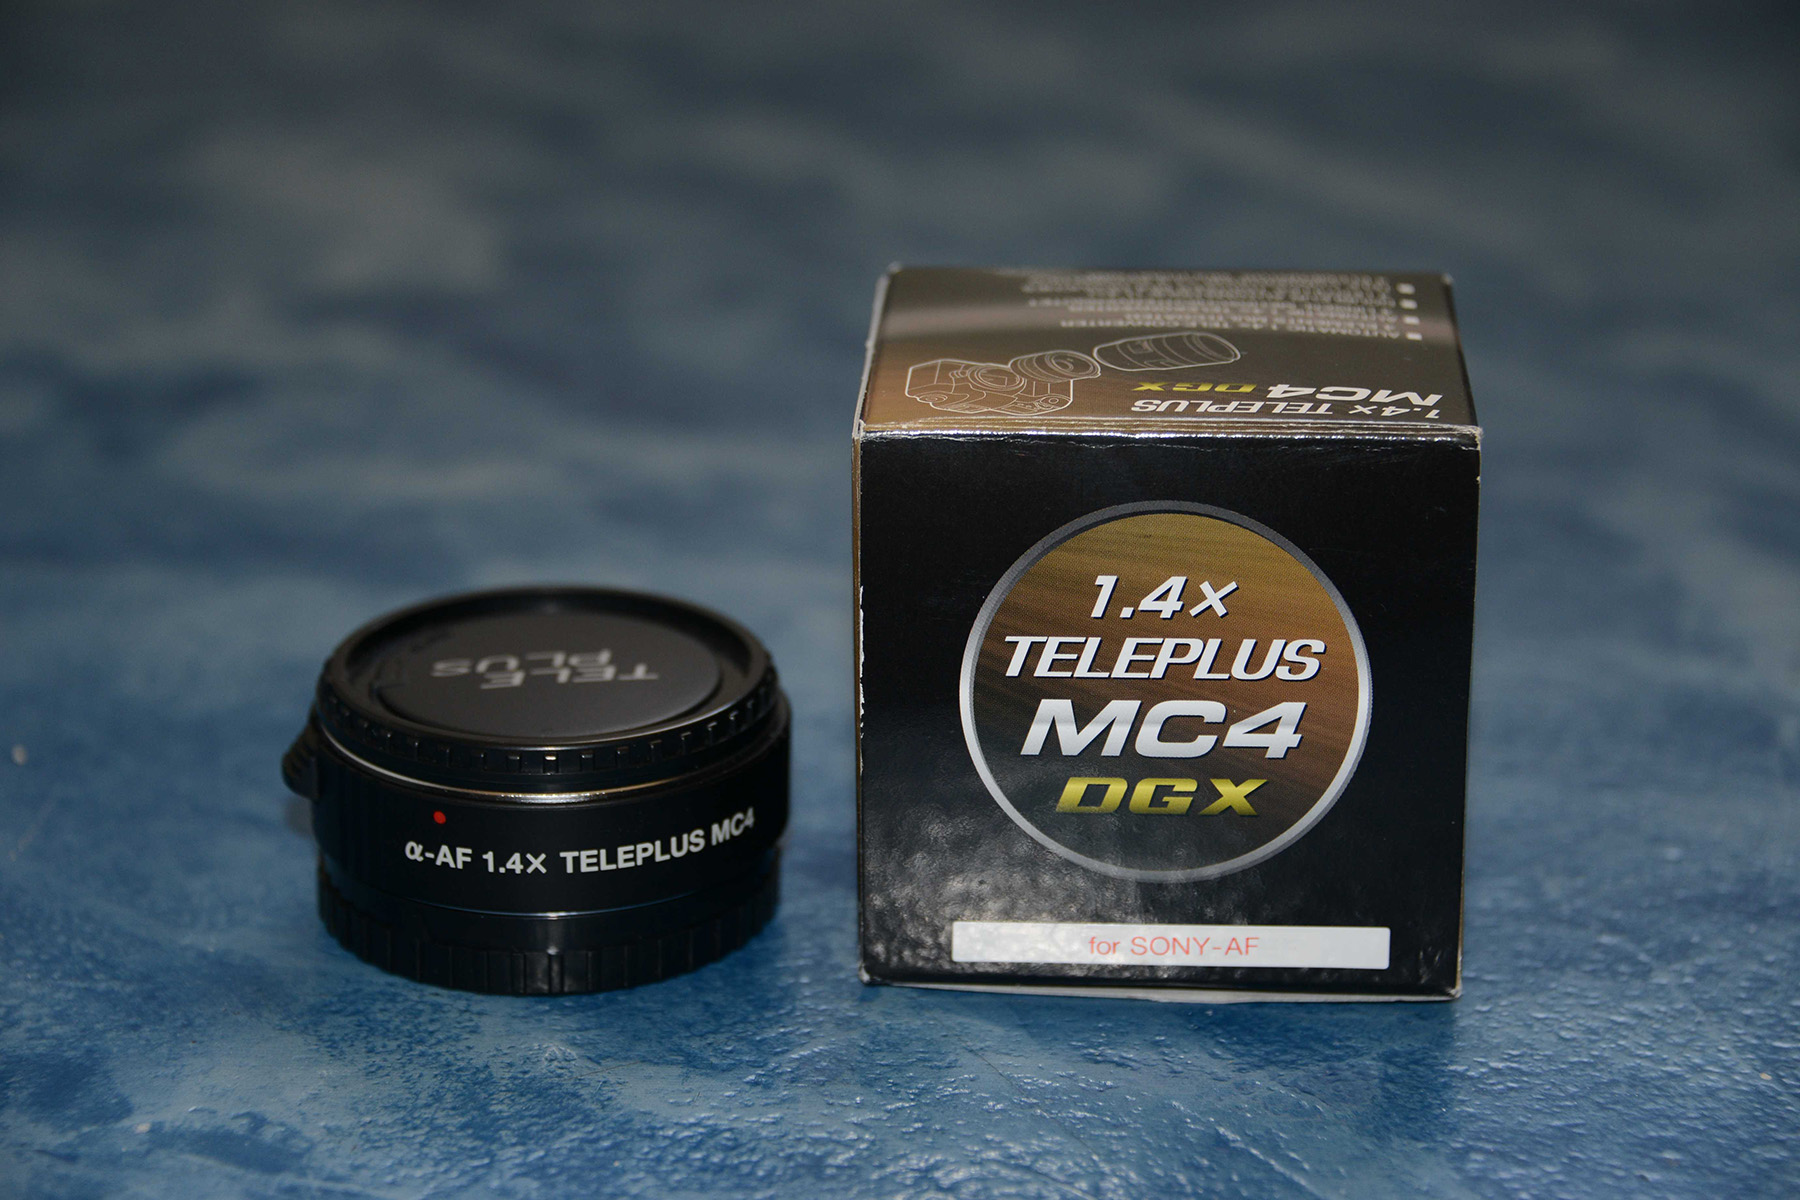 KENKO Teleplus MC4 DGX 1.4x